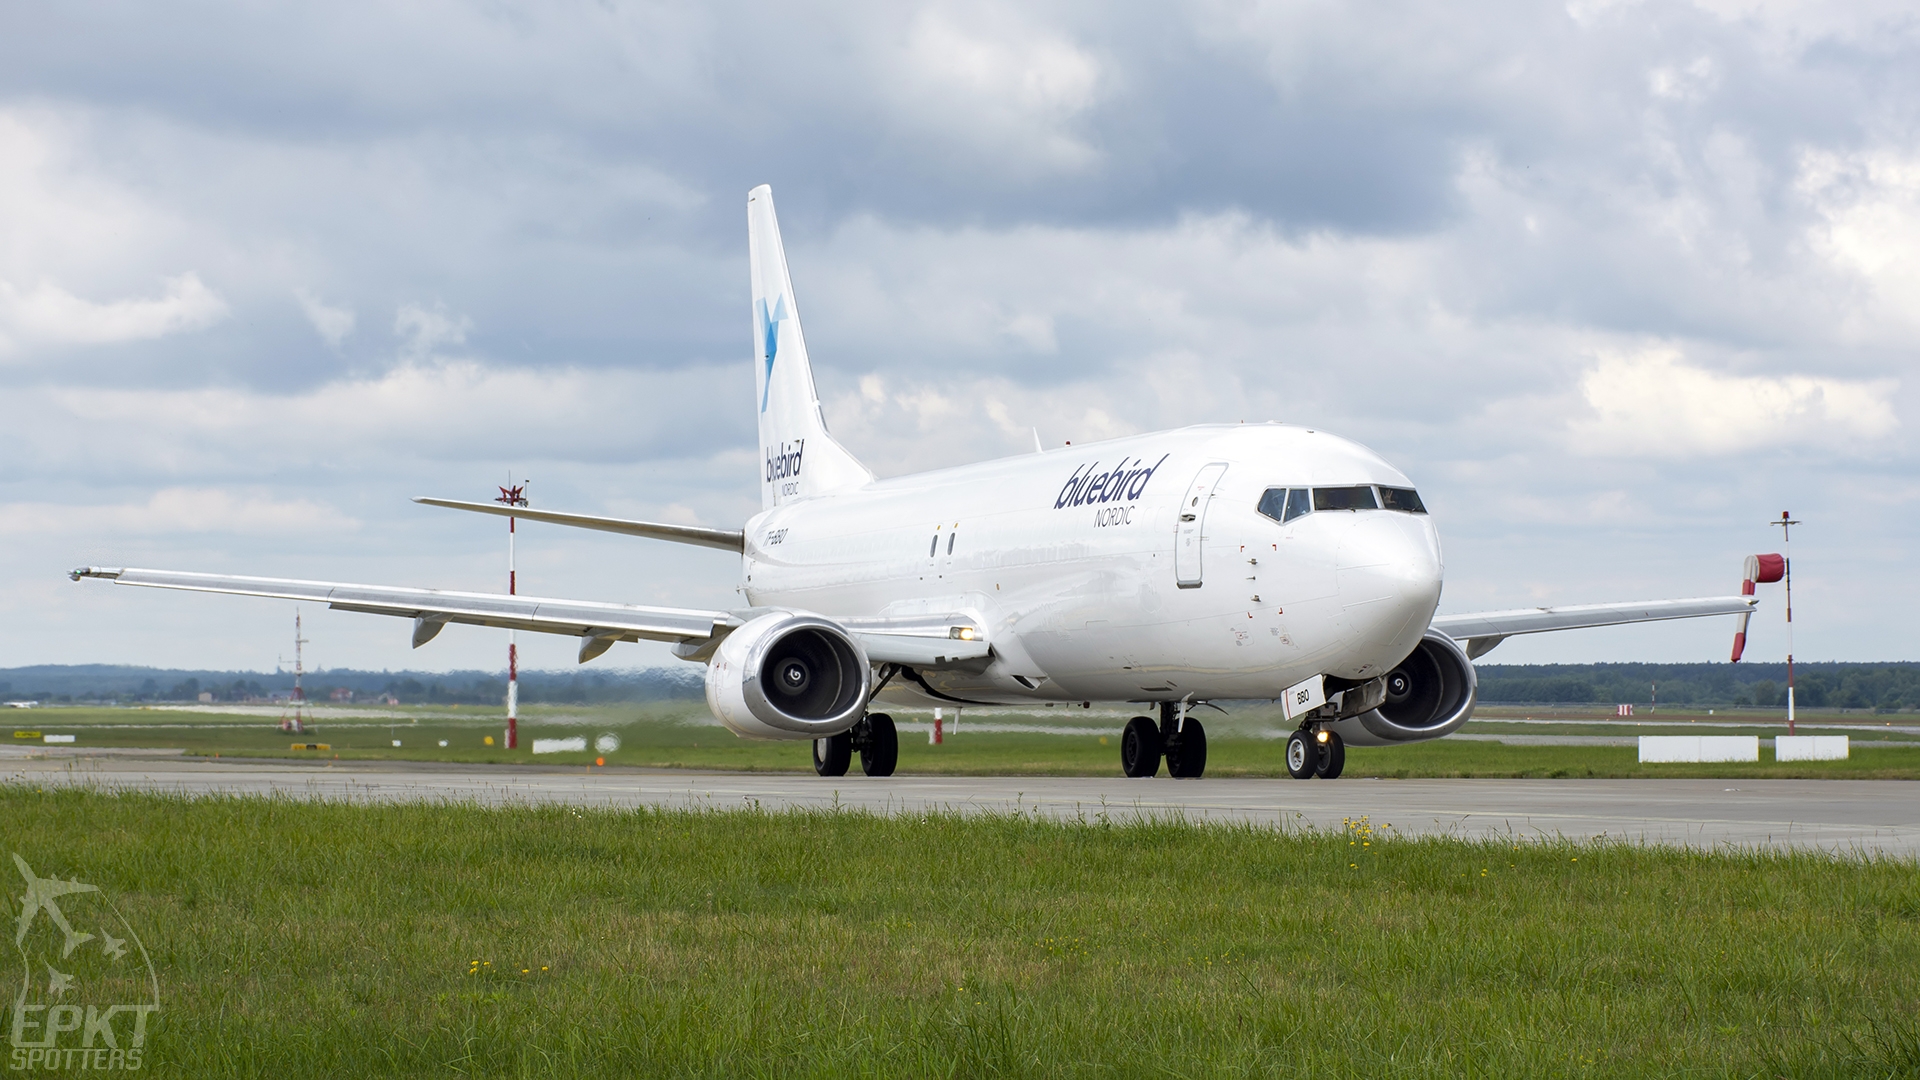 TF-BBO - Boeing 737 -46B(SF) (Bluebird Nordic) / Pyrzowice - Katowice Poland [EPKT/KTW]